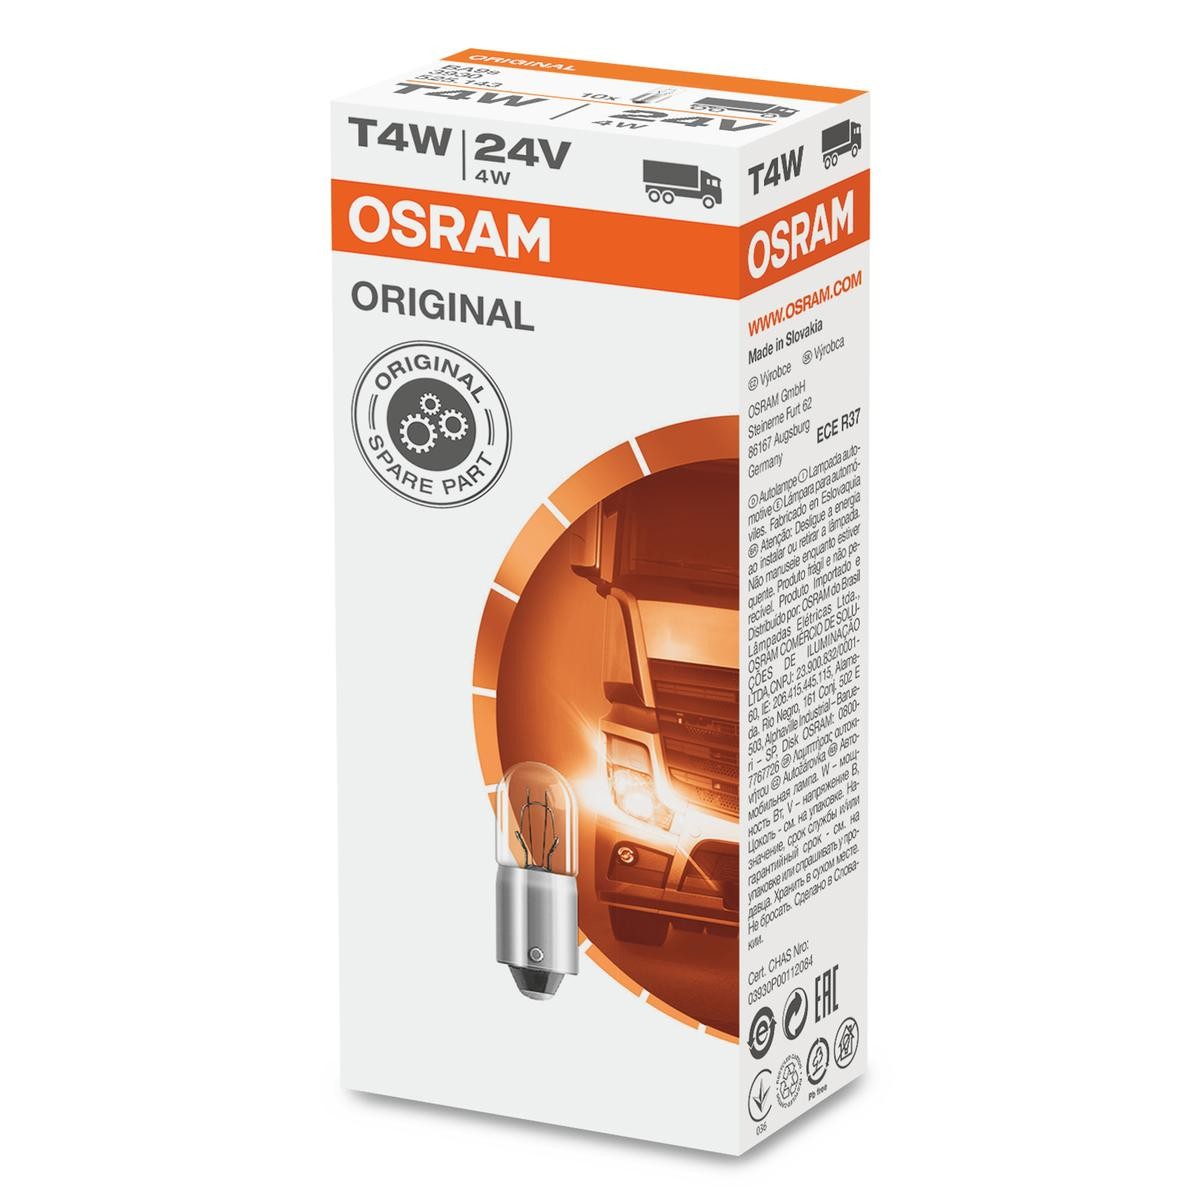 T4W OSRAM ORIGINAL LINE 24V 4W, T4W Bulb, indicator 3930 buy